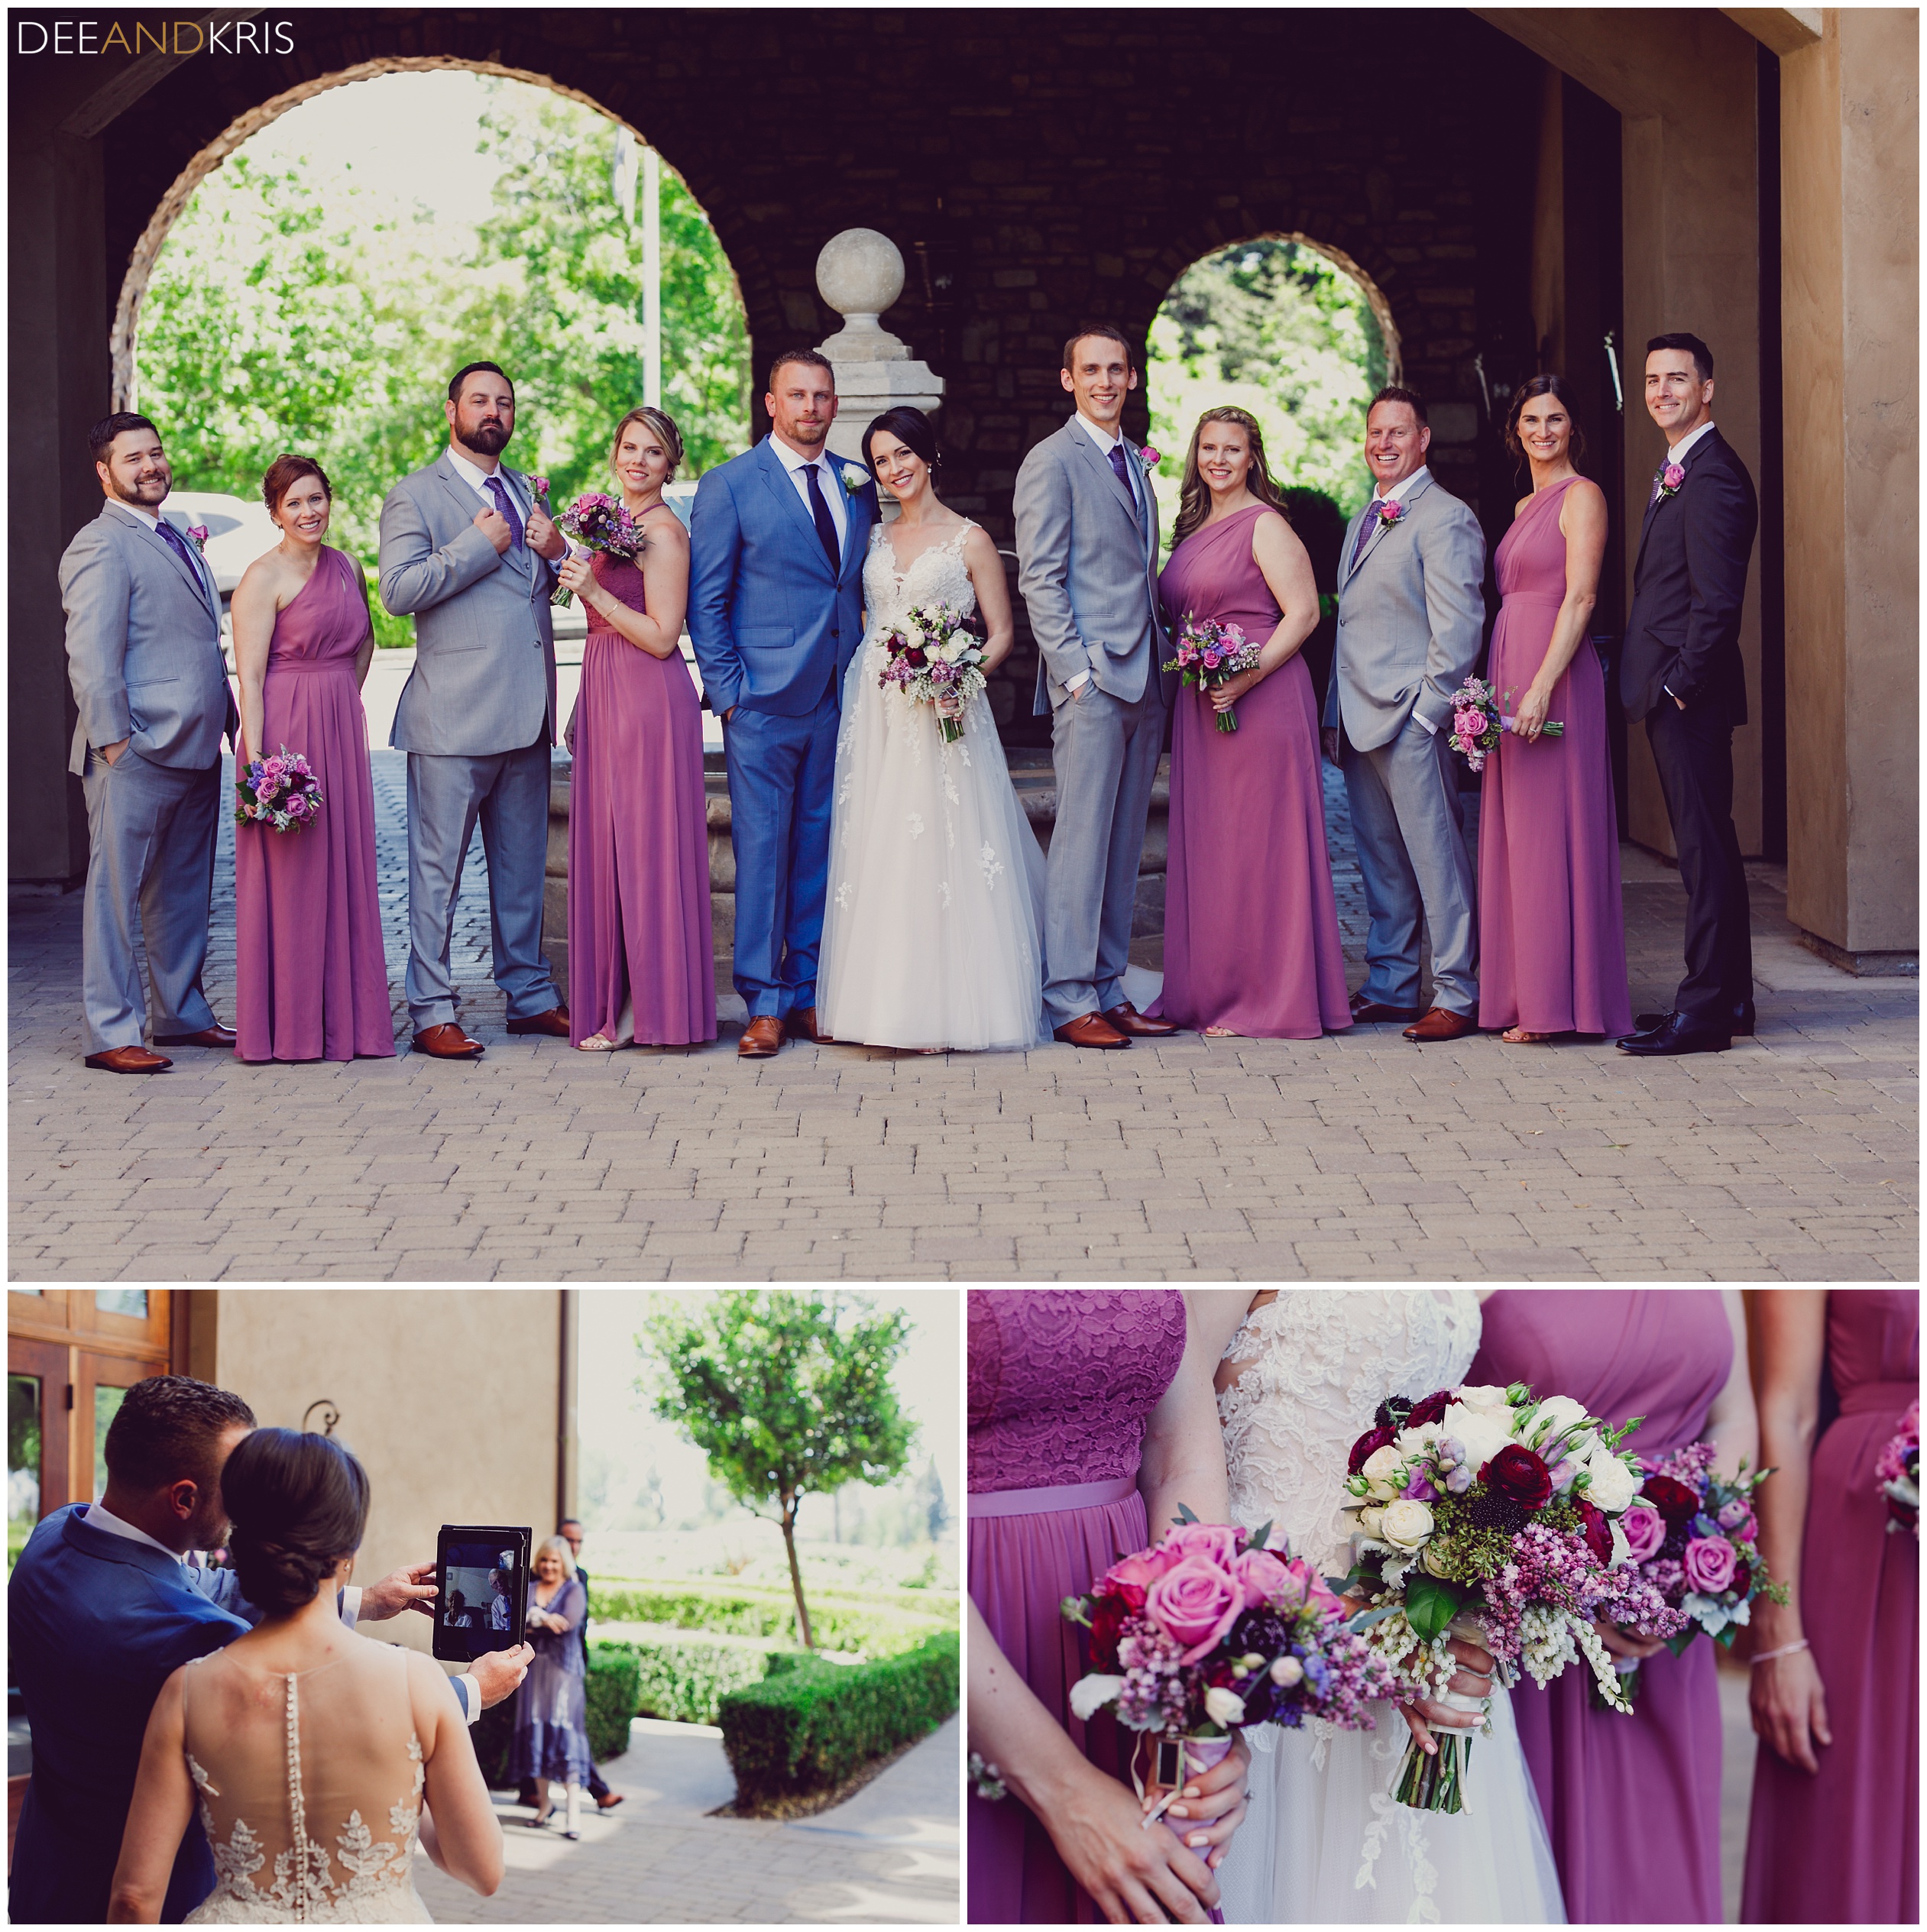 Design with Florae Bridal Party, Bridal Bouquet, Westin Sacramento Hotel, Sacramento Wedding photographers, Dee and Kris Photography, Bride and Bridemaids 